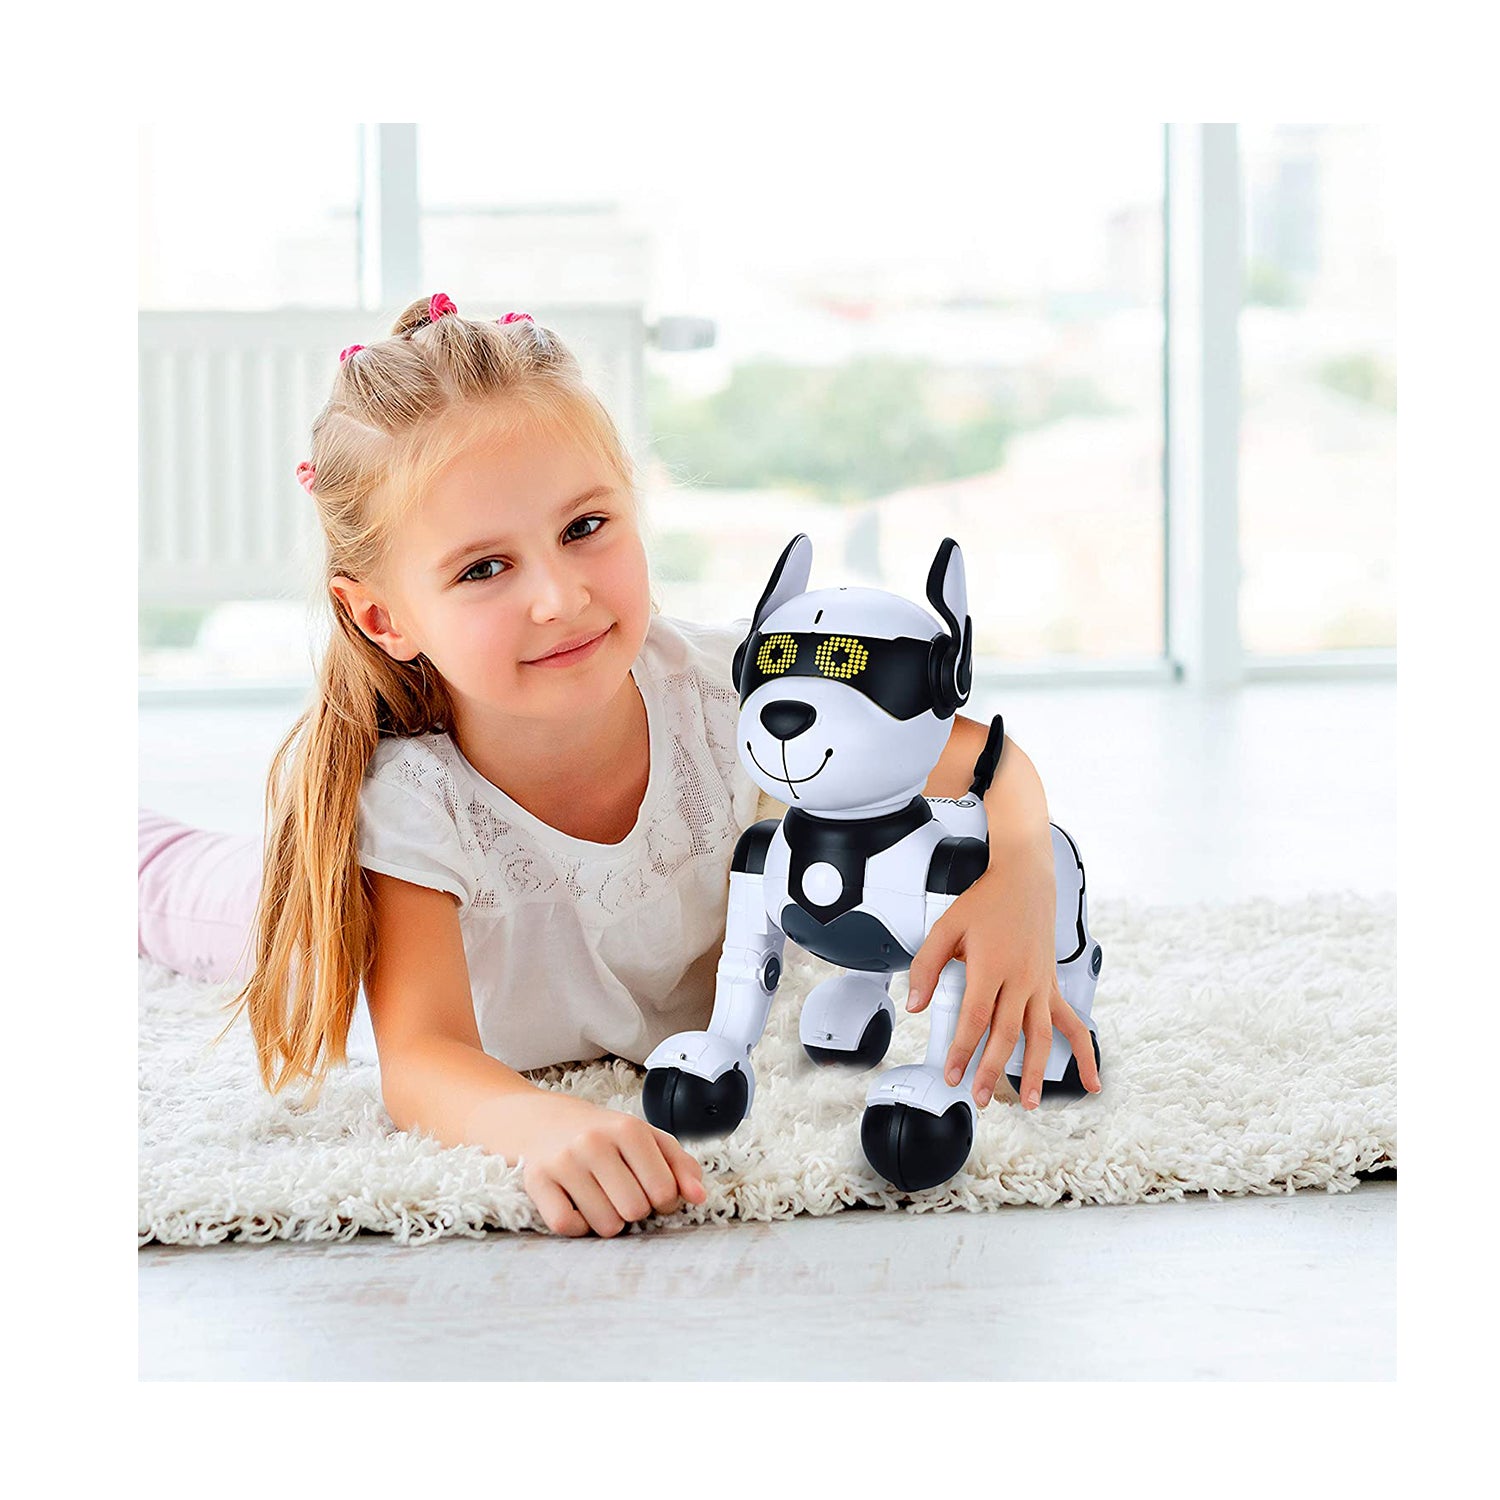 Contixo Smart Puppy Interactive Robot Pet Toy